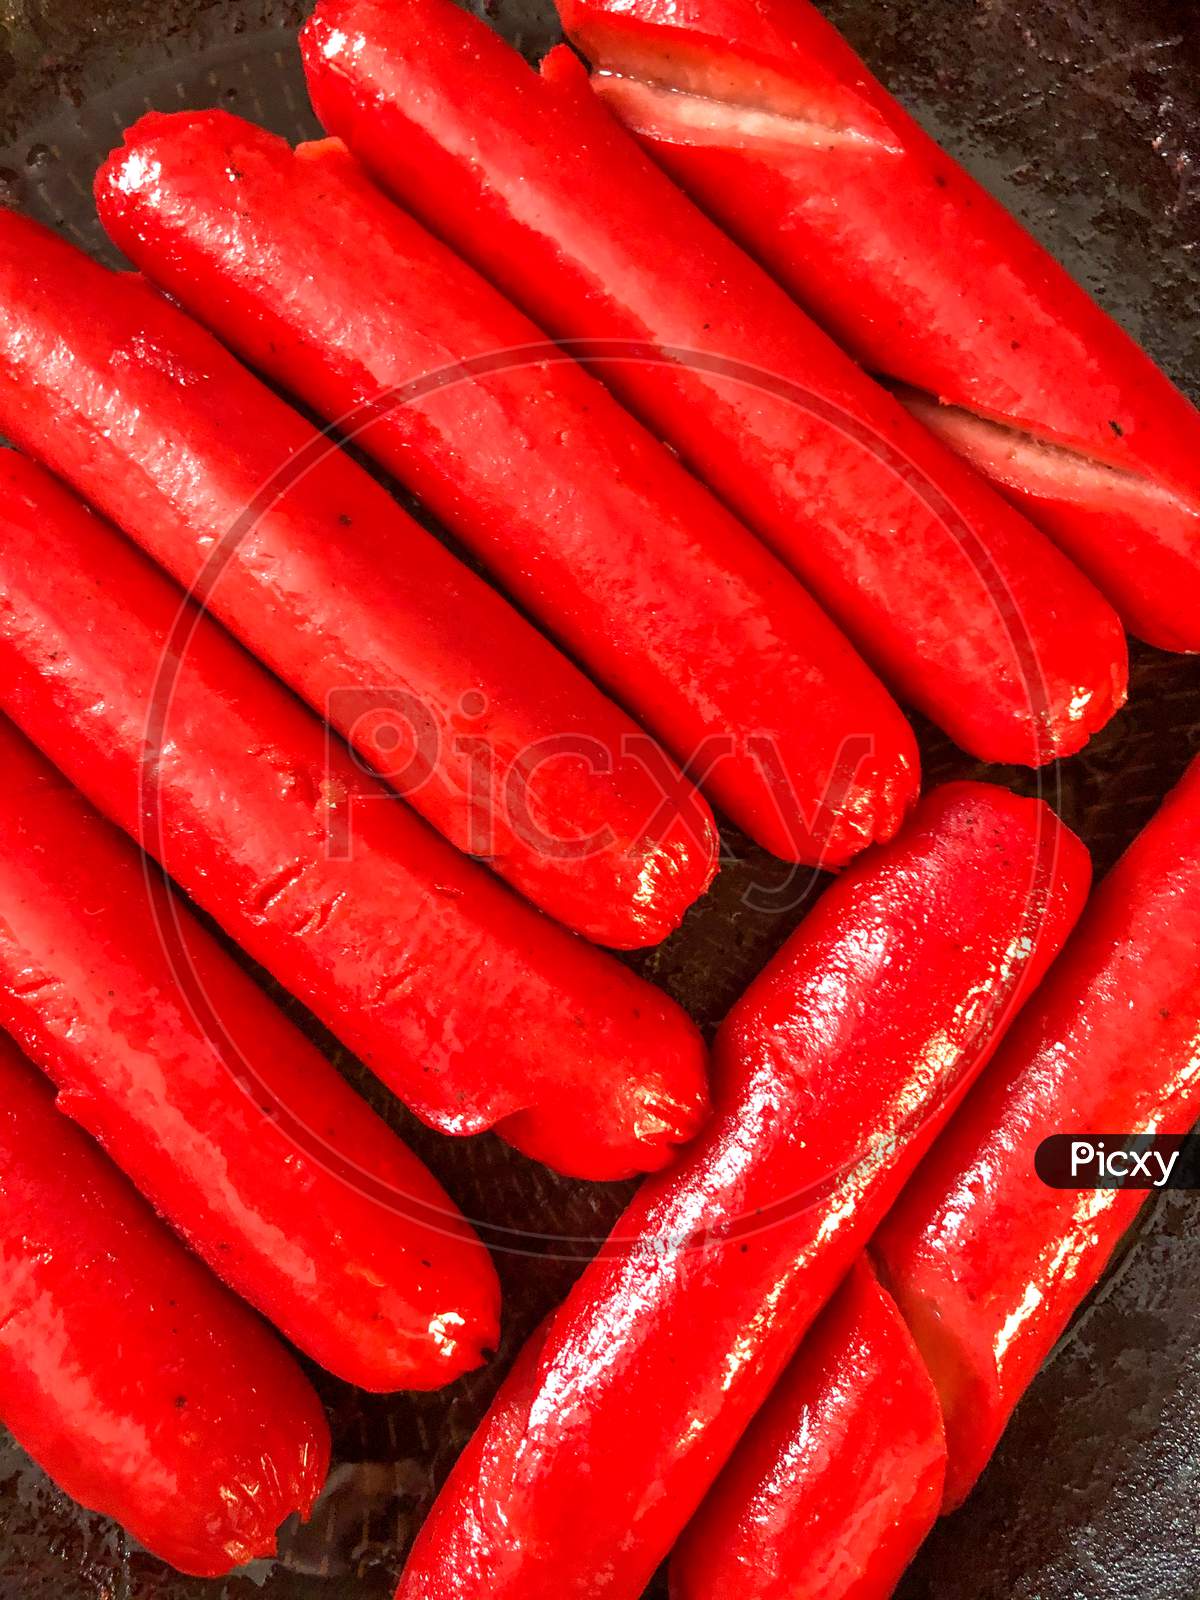 Filipino hotdog sausages cooking in a frying pan